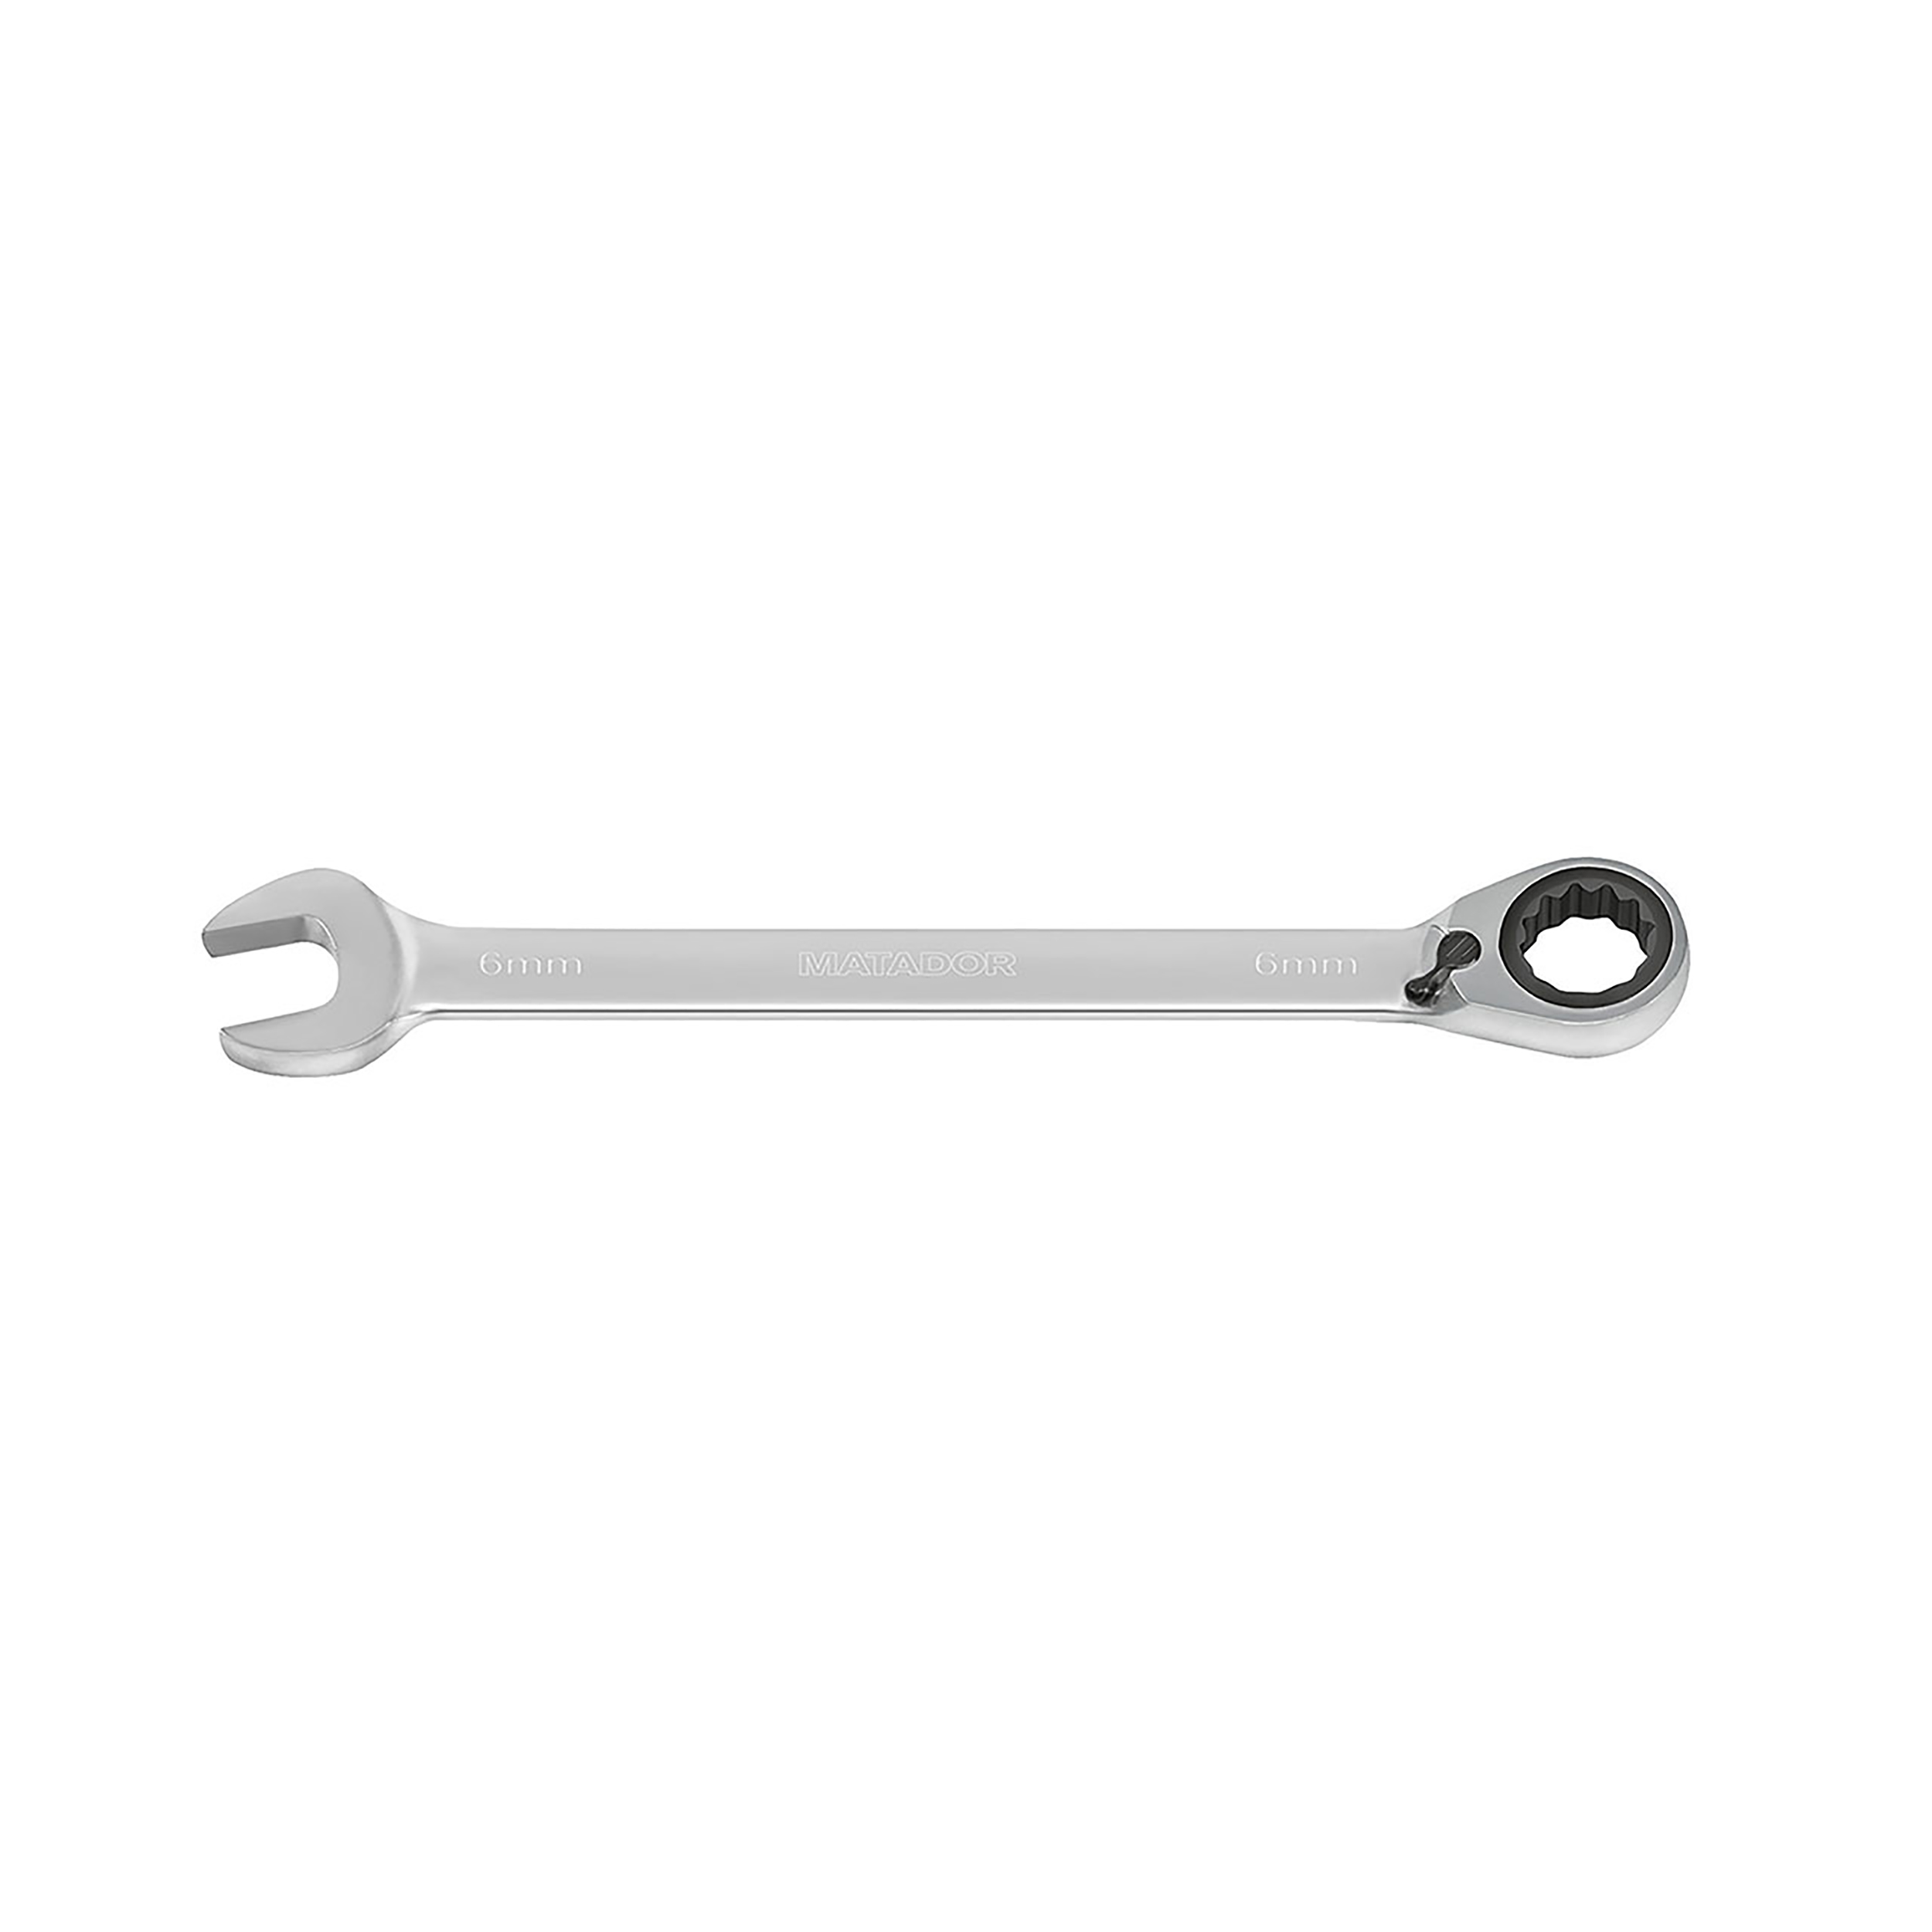 Knarren-Ringmaulschlüssel mit Hebel, 9 mm, 48 Nm, MATADOR Art.-Nr.: 01890090